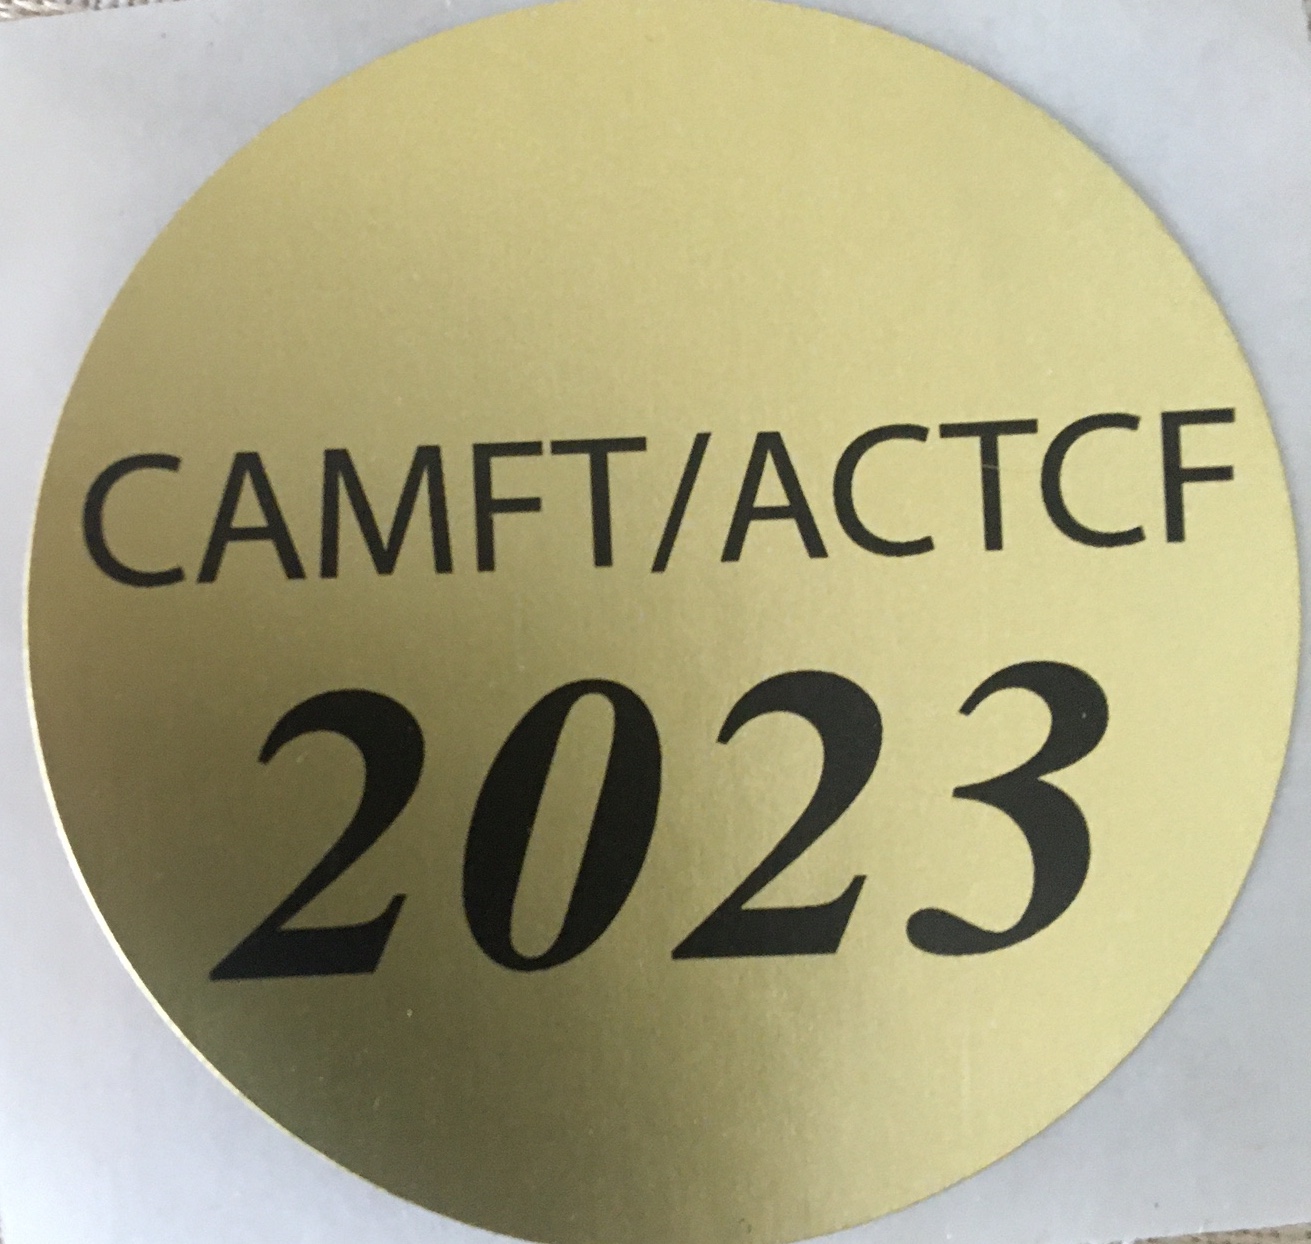 AAMFT Digital Badges